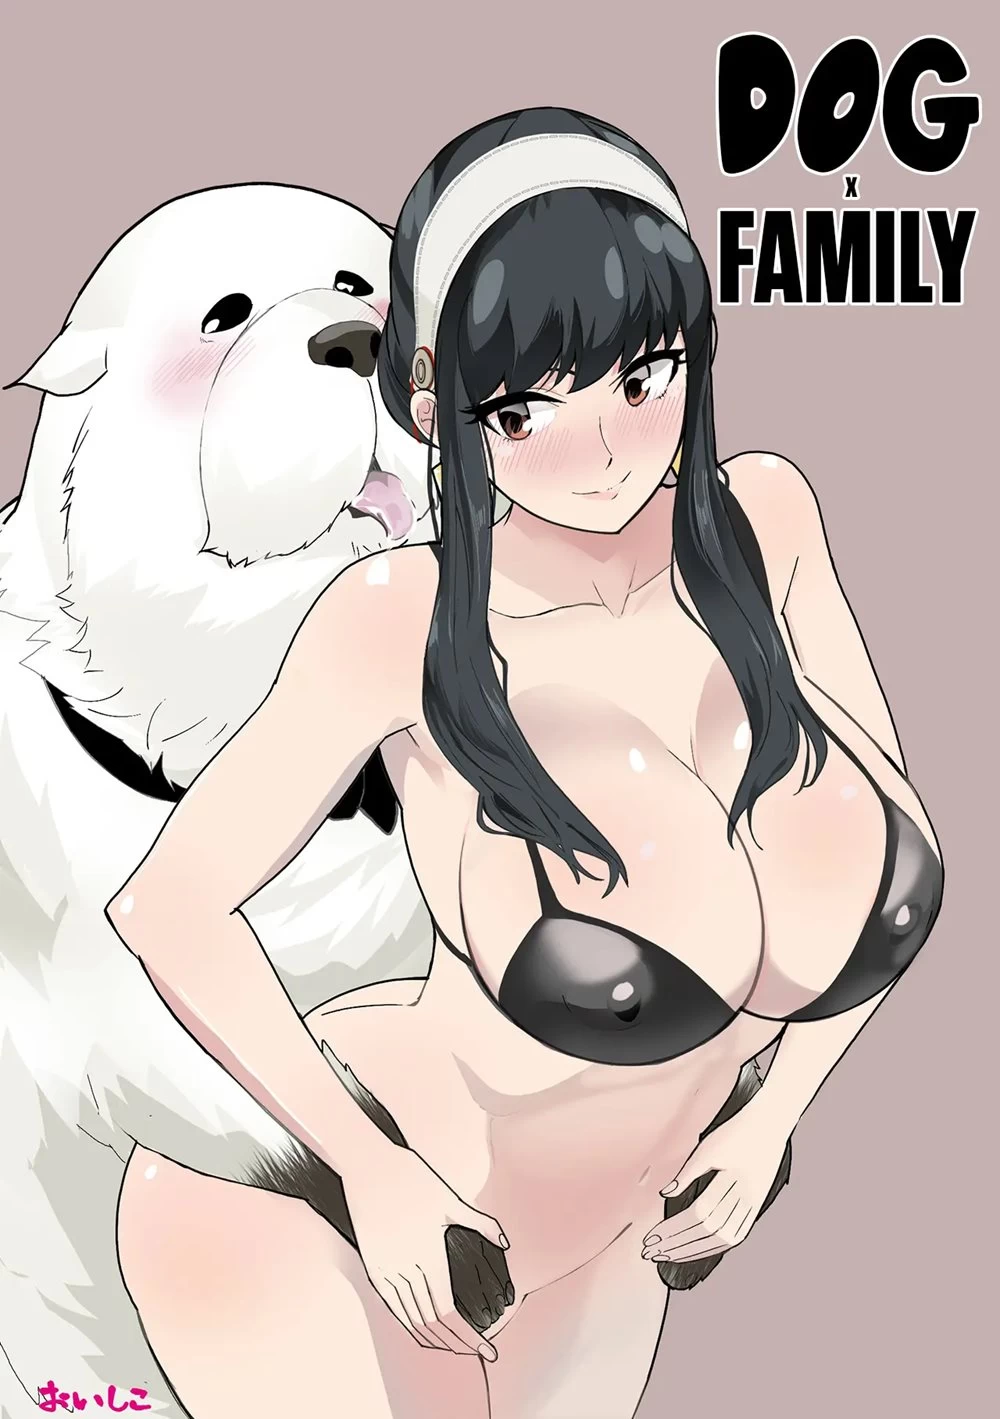 Spy family porn comic